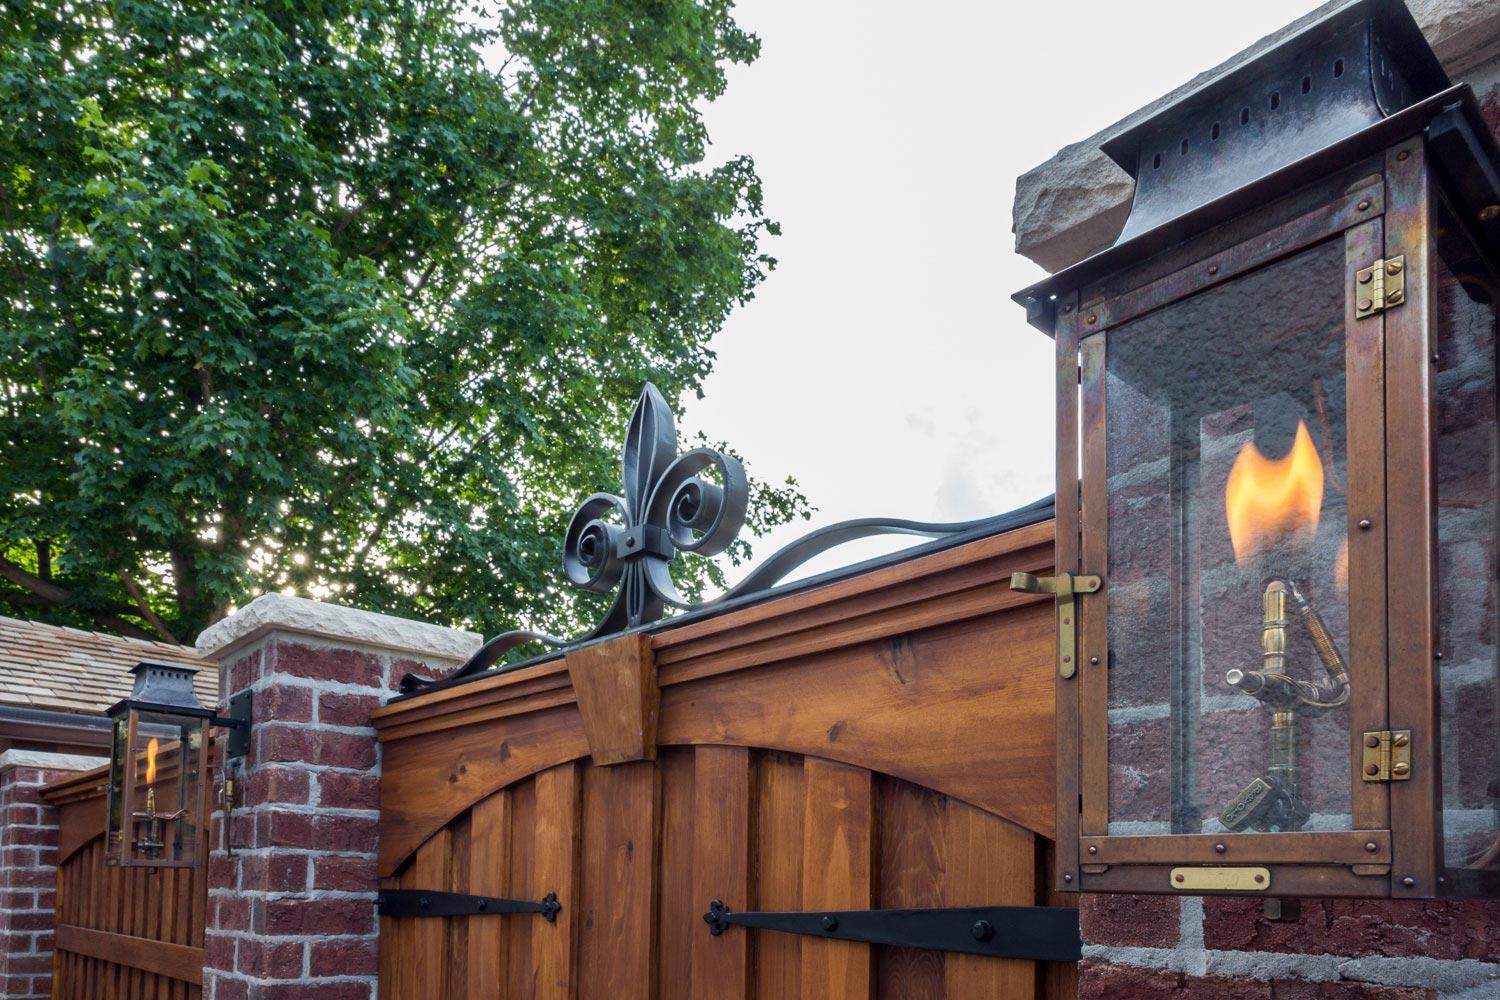 Gas lamps and a iron fleur-de-lis accent this brick courtyard gate.